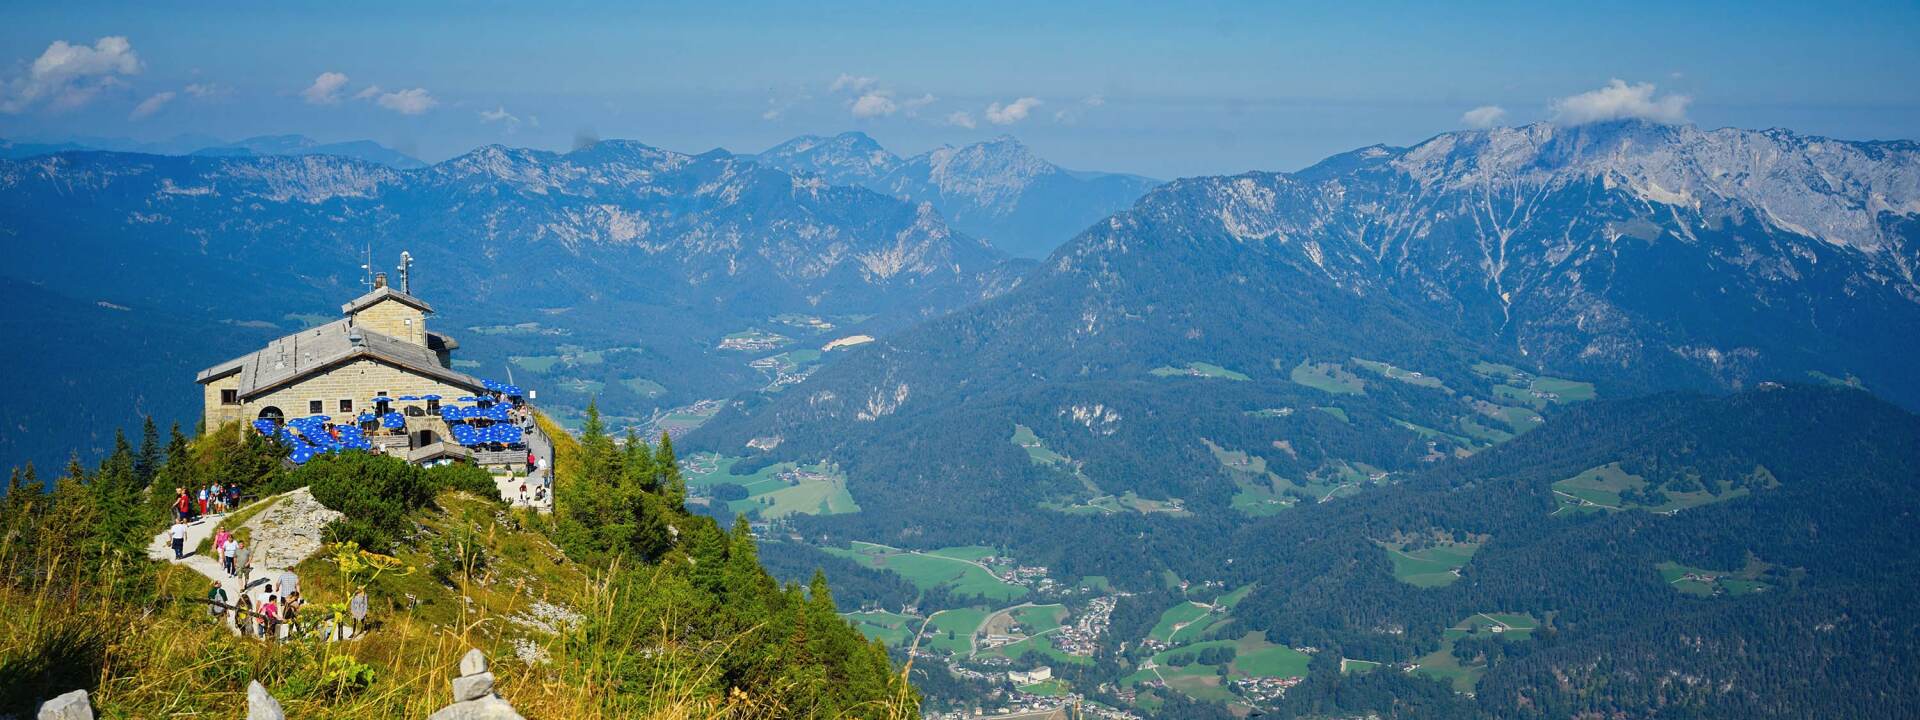 Tour to Eagle's Nest - panoramic view © Salzburg Panorama Tours